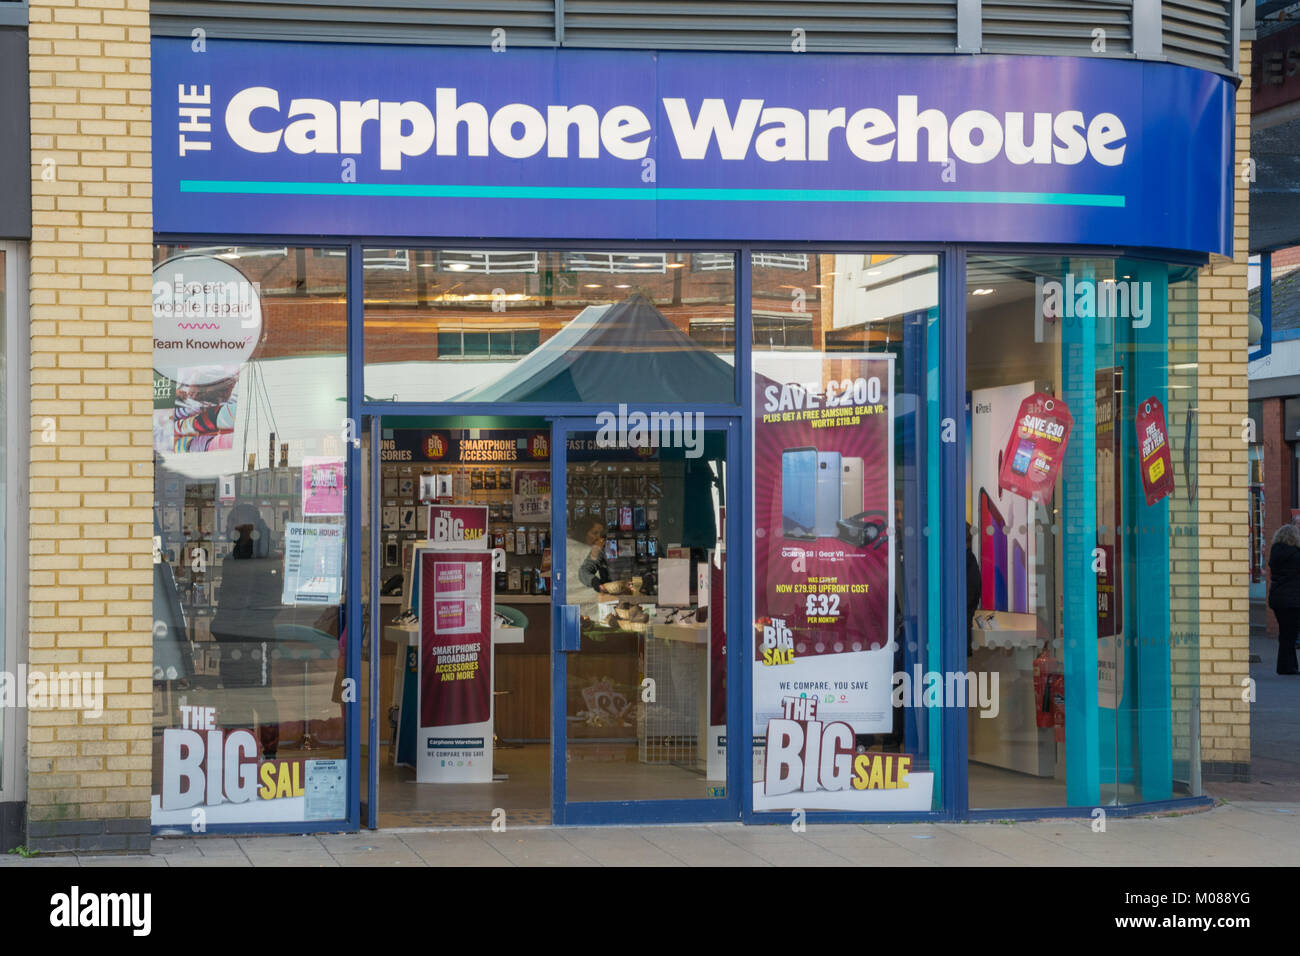 Carphone warehouse shop front and sign, UK Stock Photo